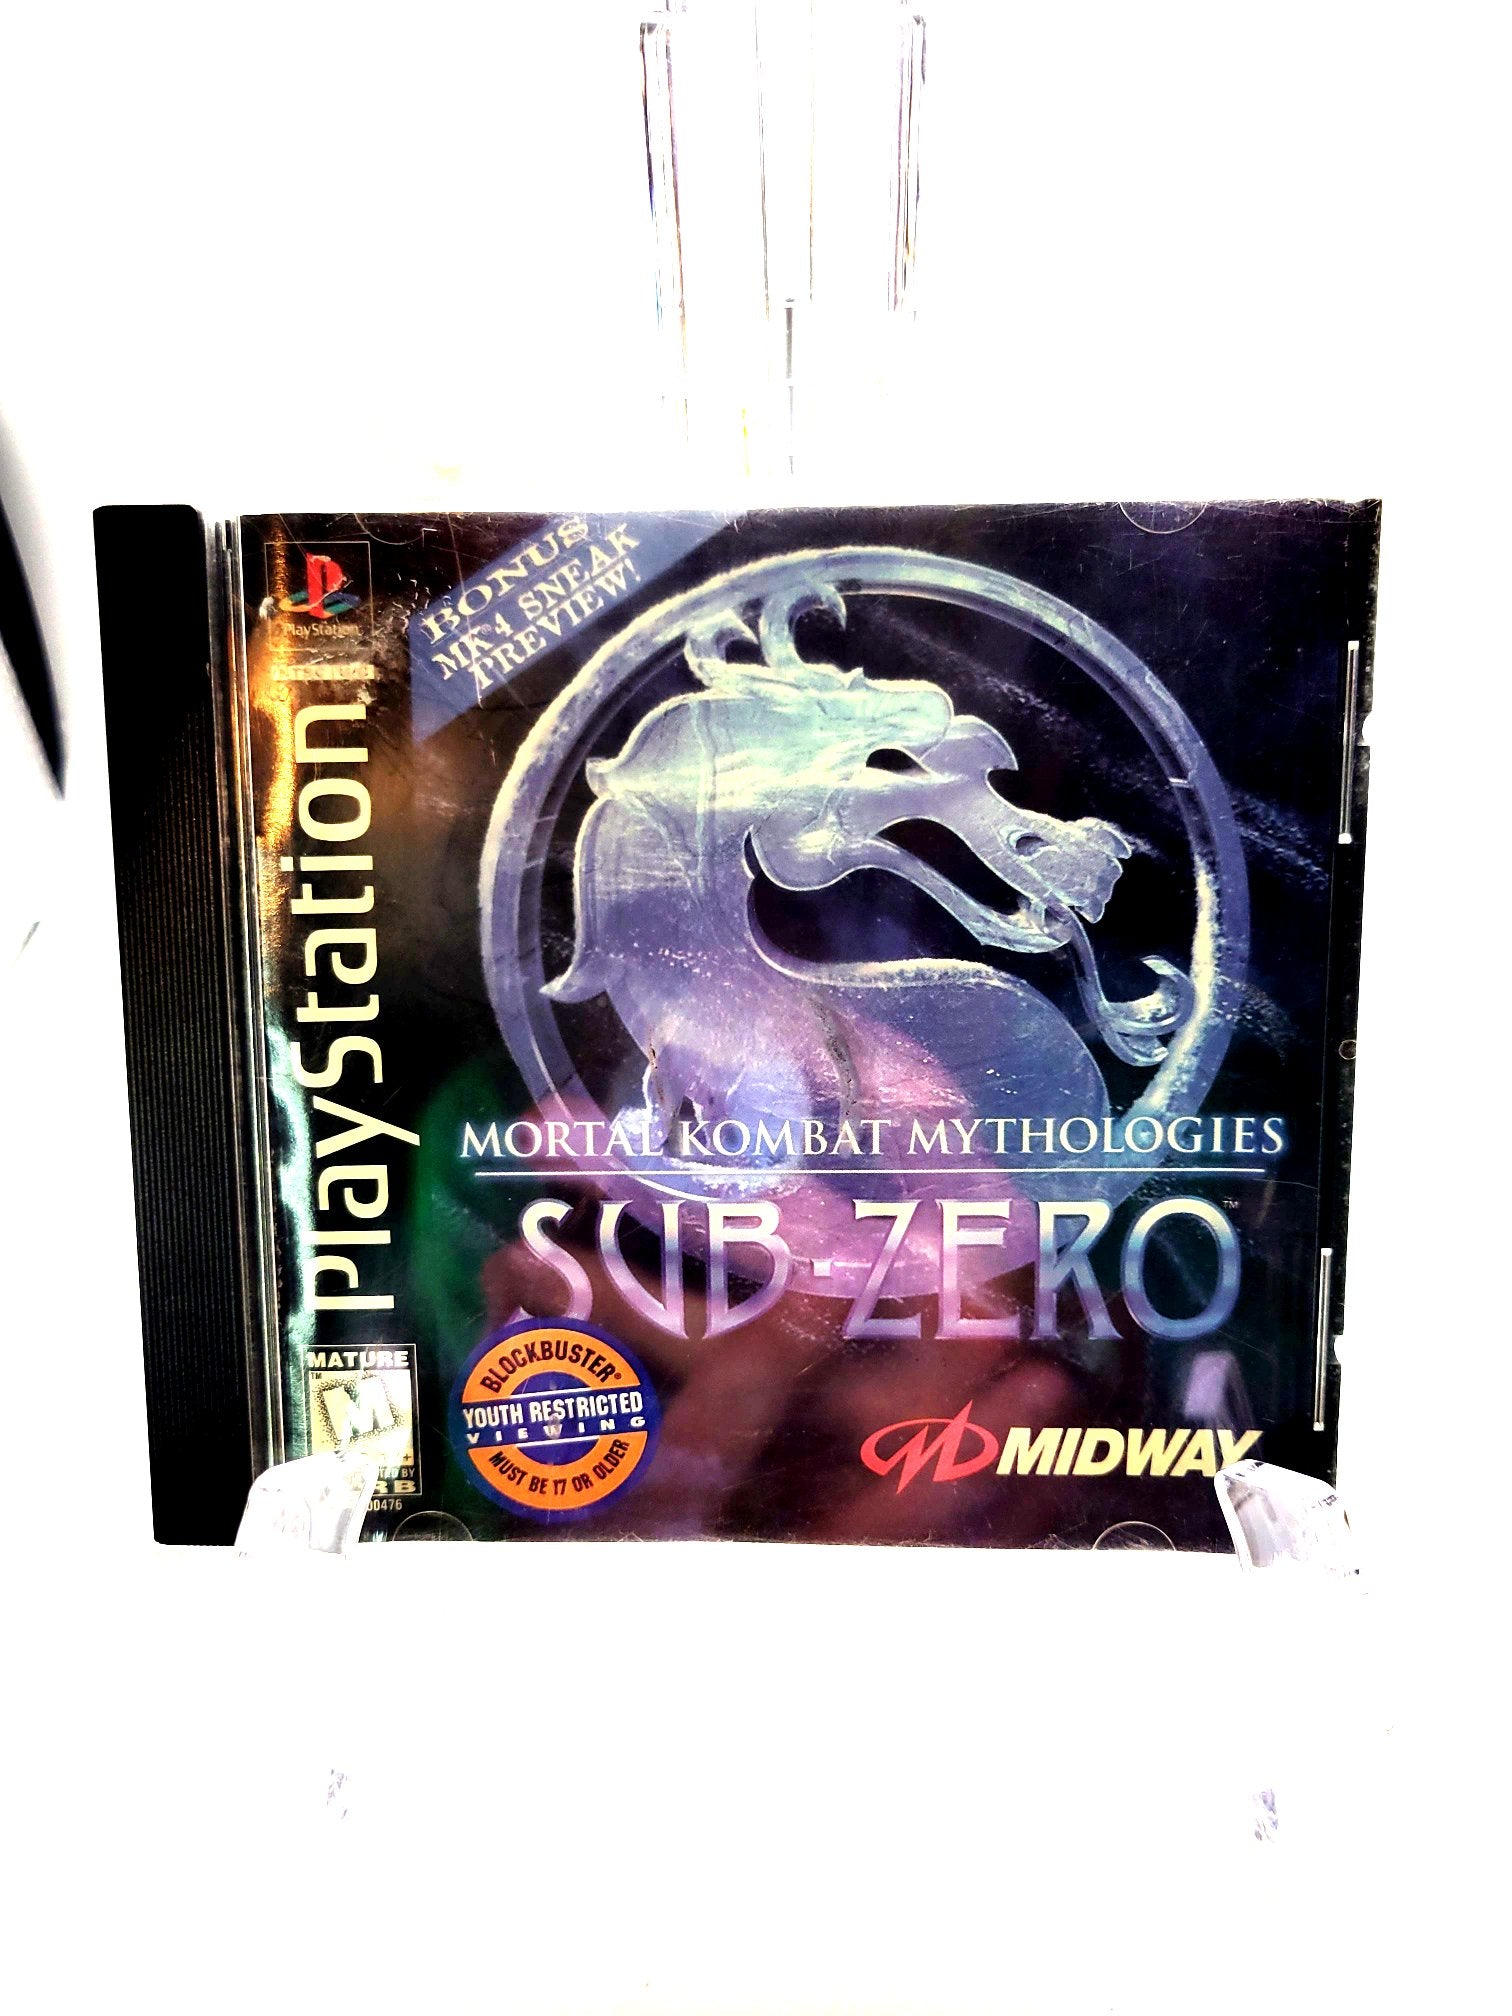 Sony Playstation One Mortal Kombat Mythologies: Sub Zero Video